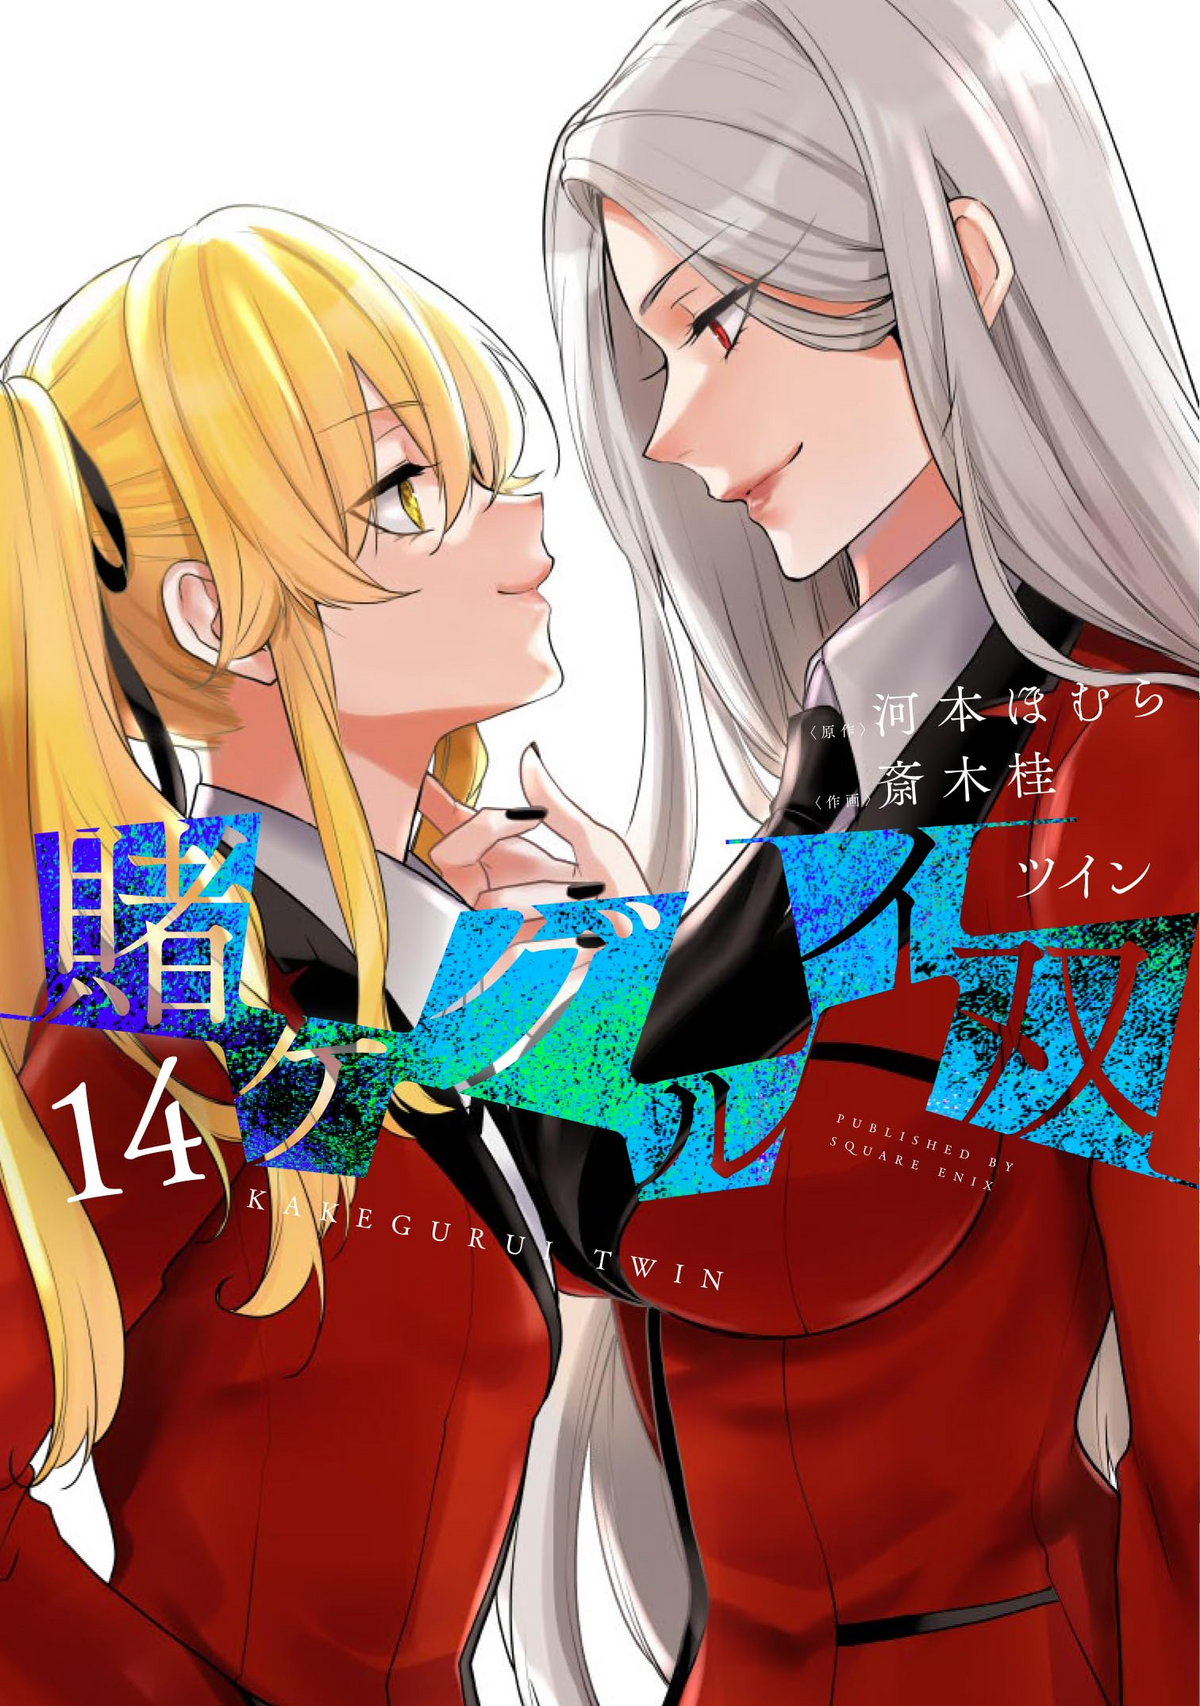 Kakegurui Twin Manga to End on May 22